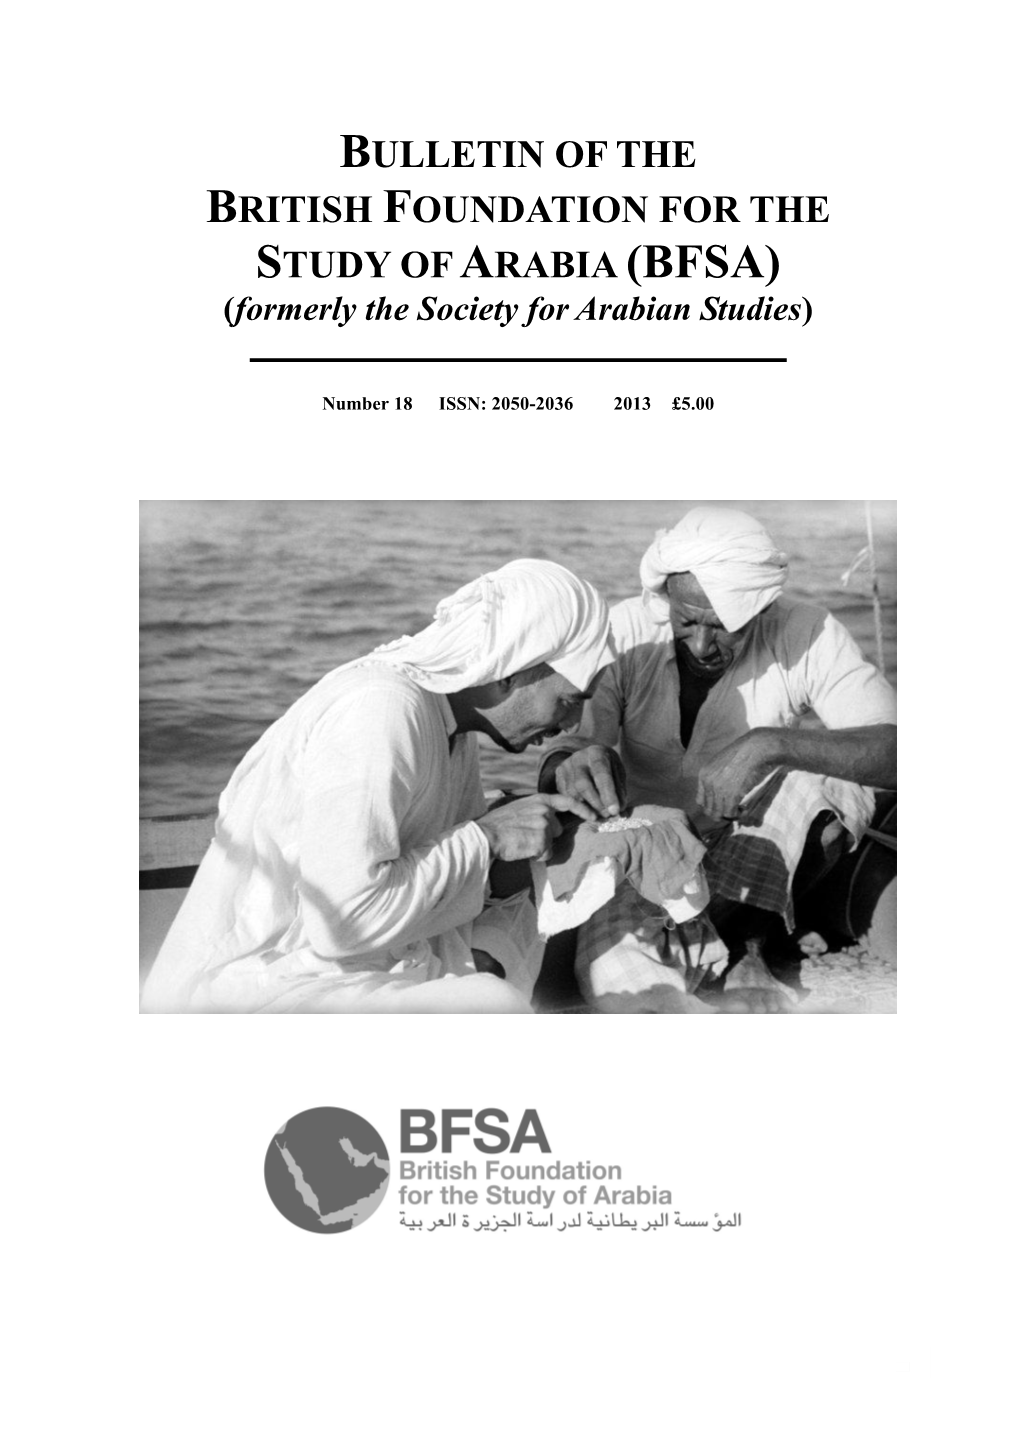 BFSA) (Formerly the Society for Arabian Studies)